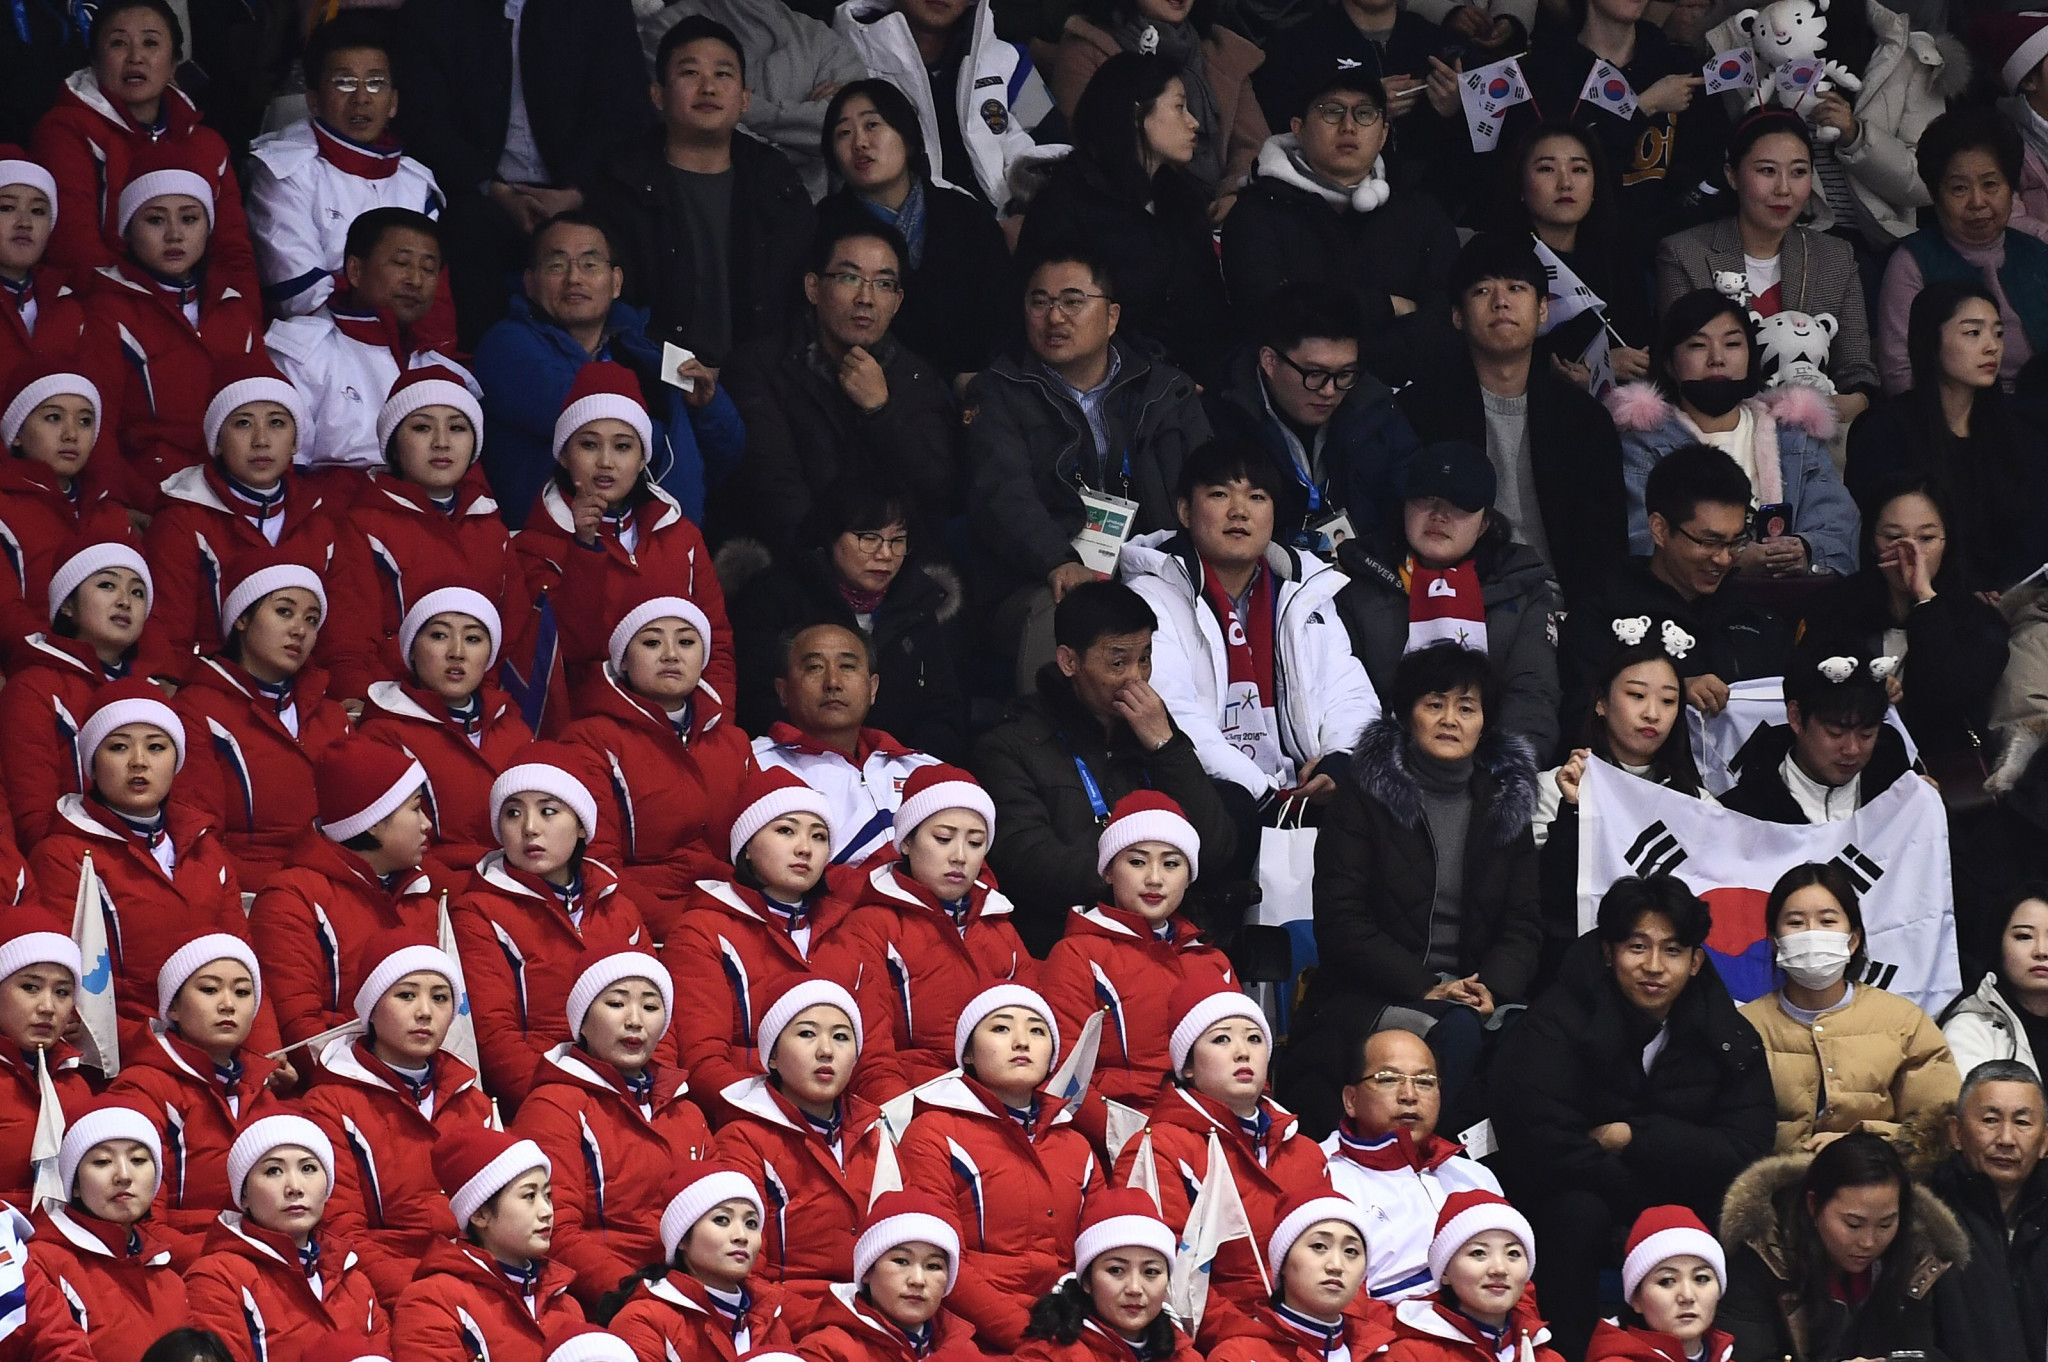 North Korean cheerleaders attending Pyeongchang 2018 ©Getty Images